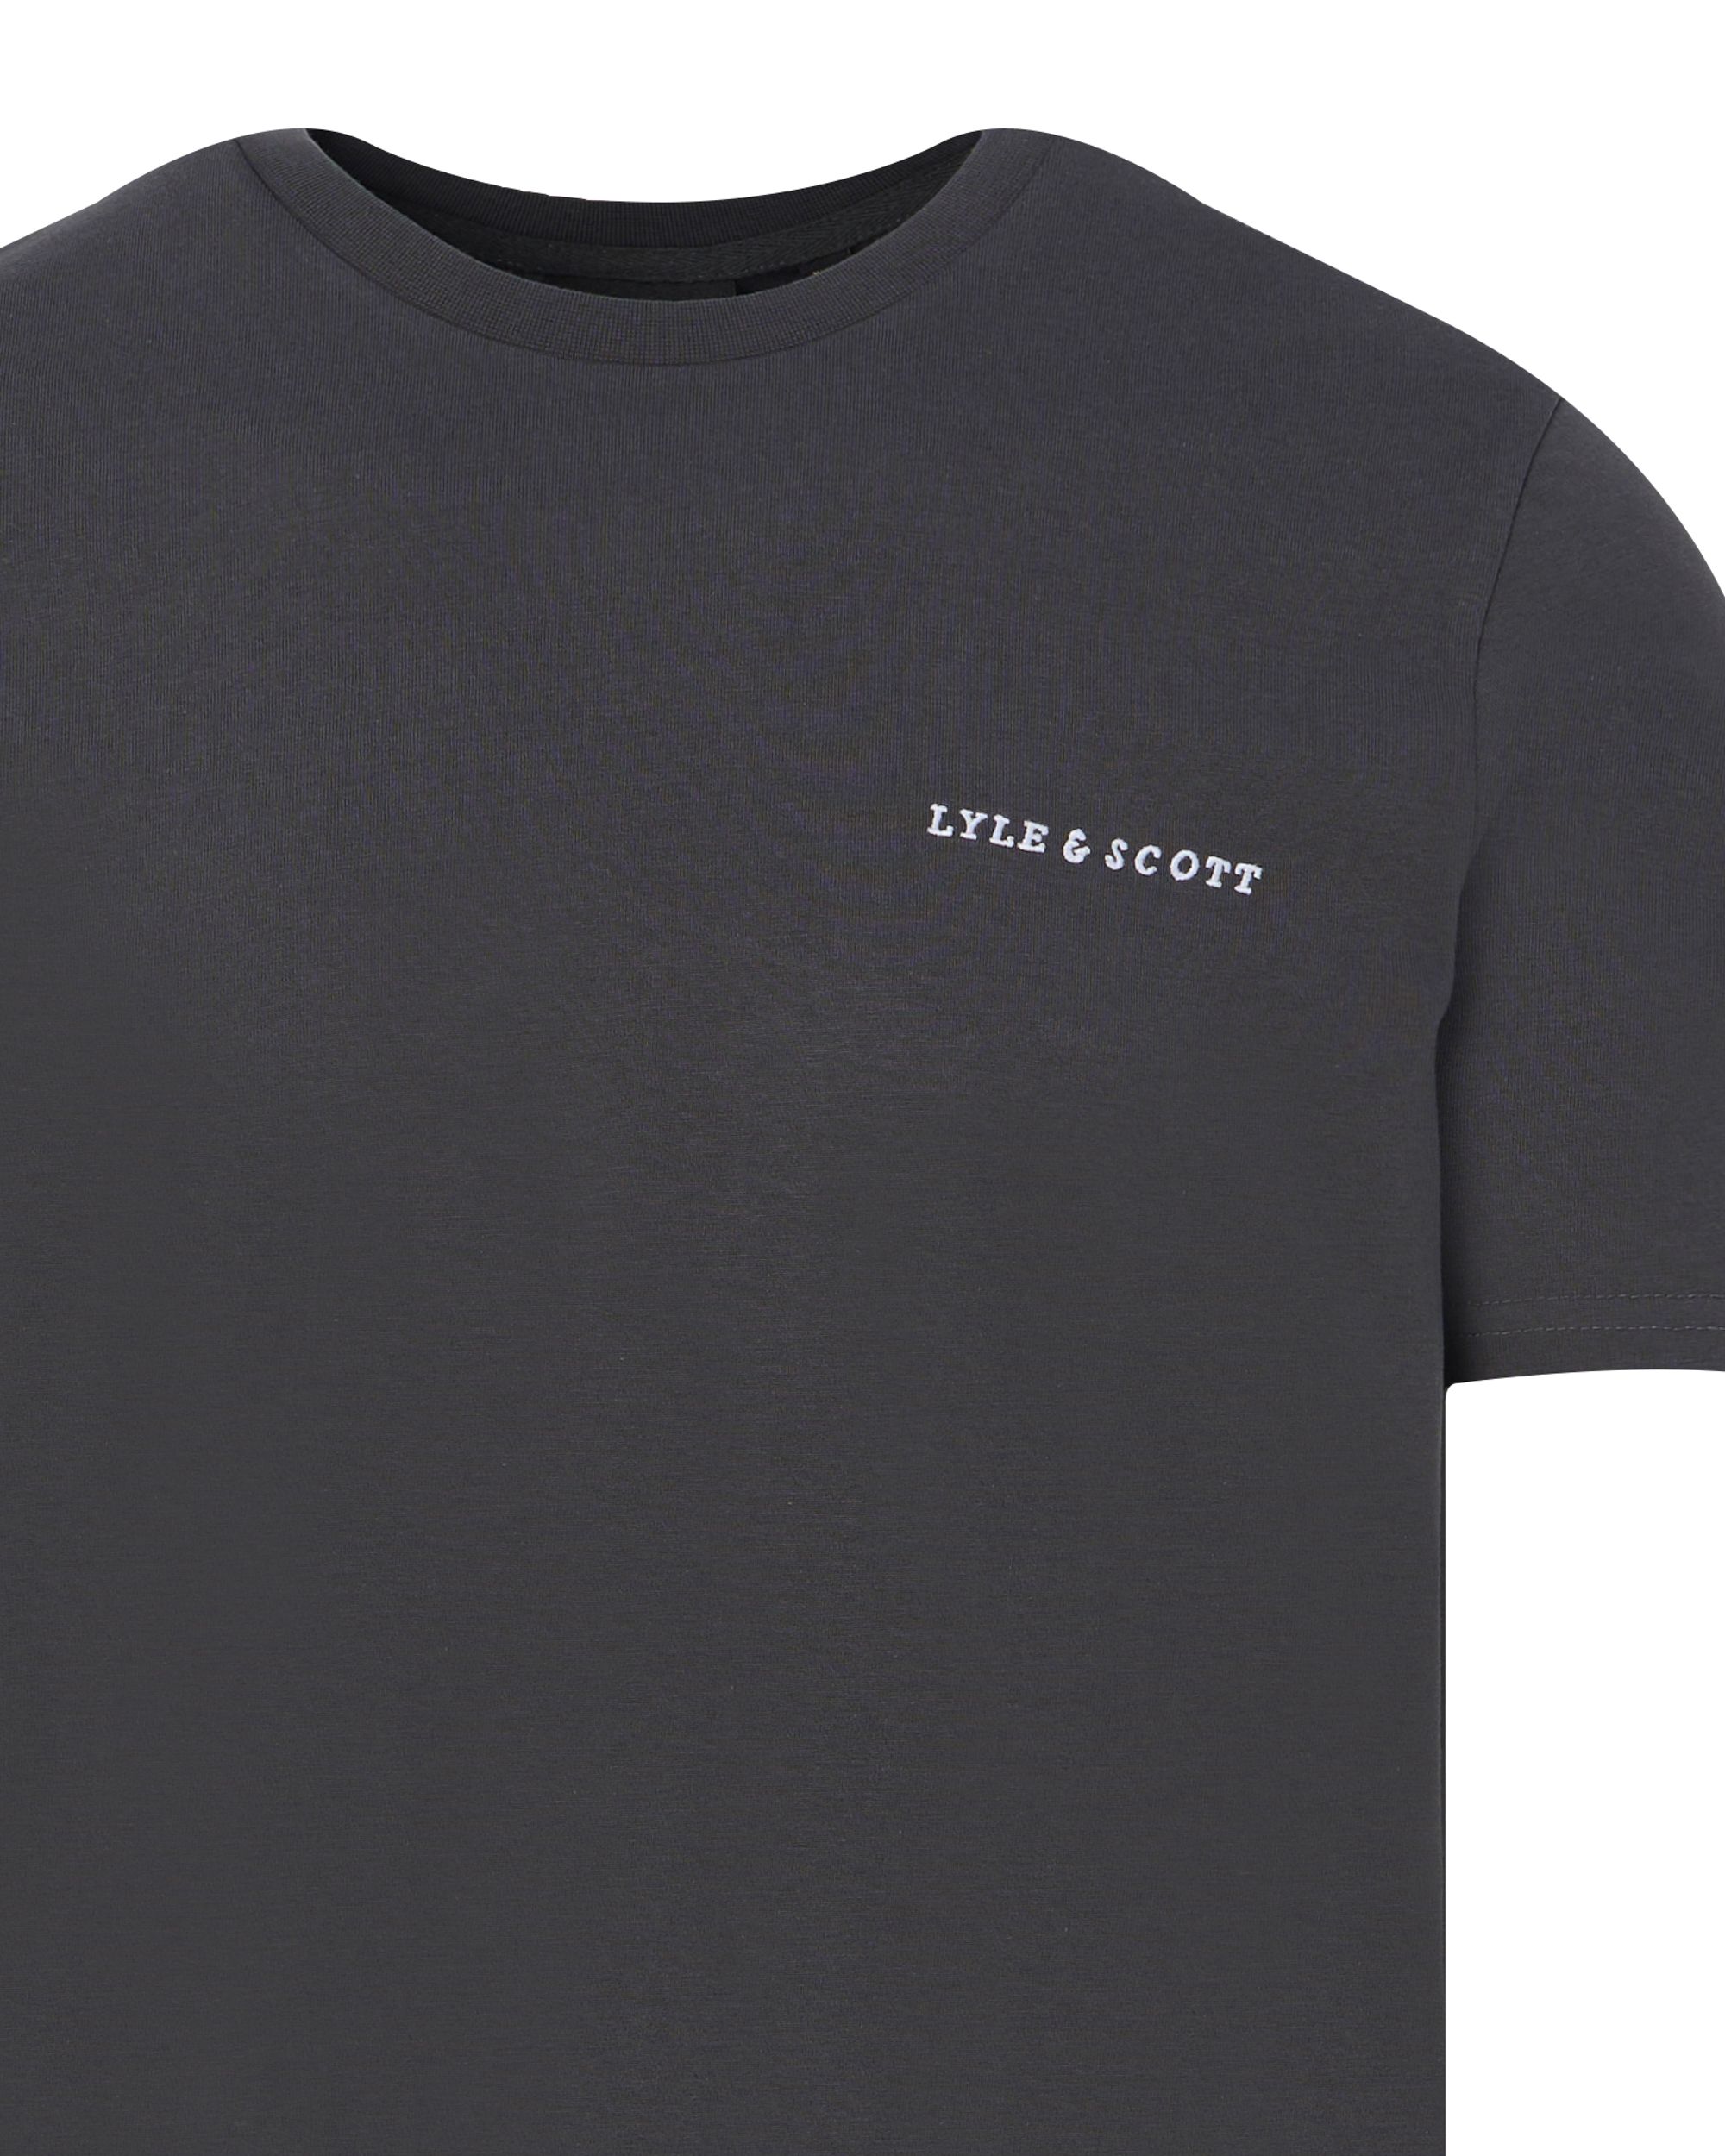 Lyle & Scott T-shirt KM Grijs 092269-001-L